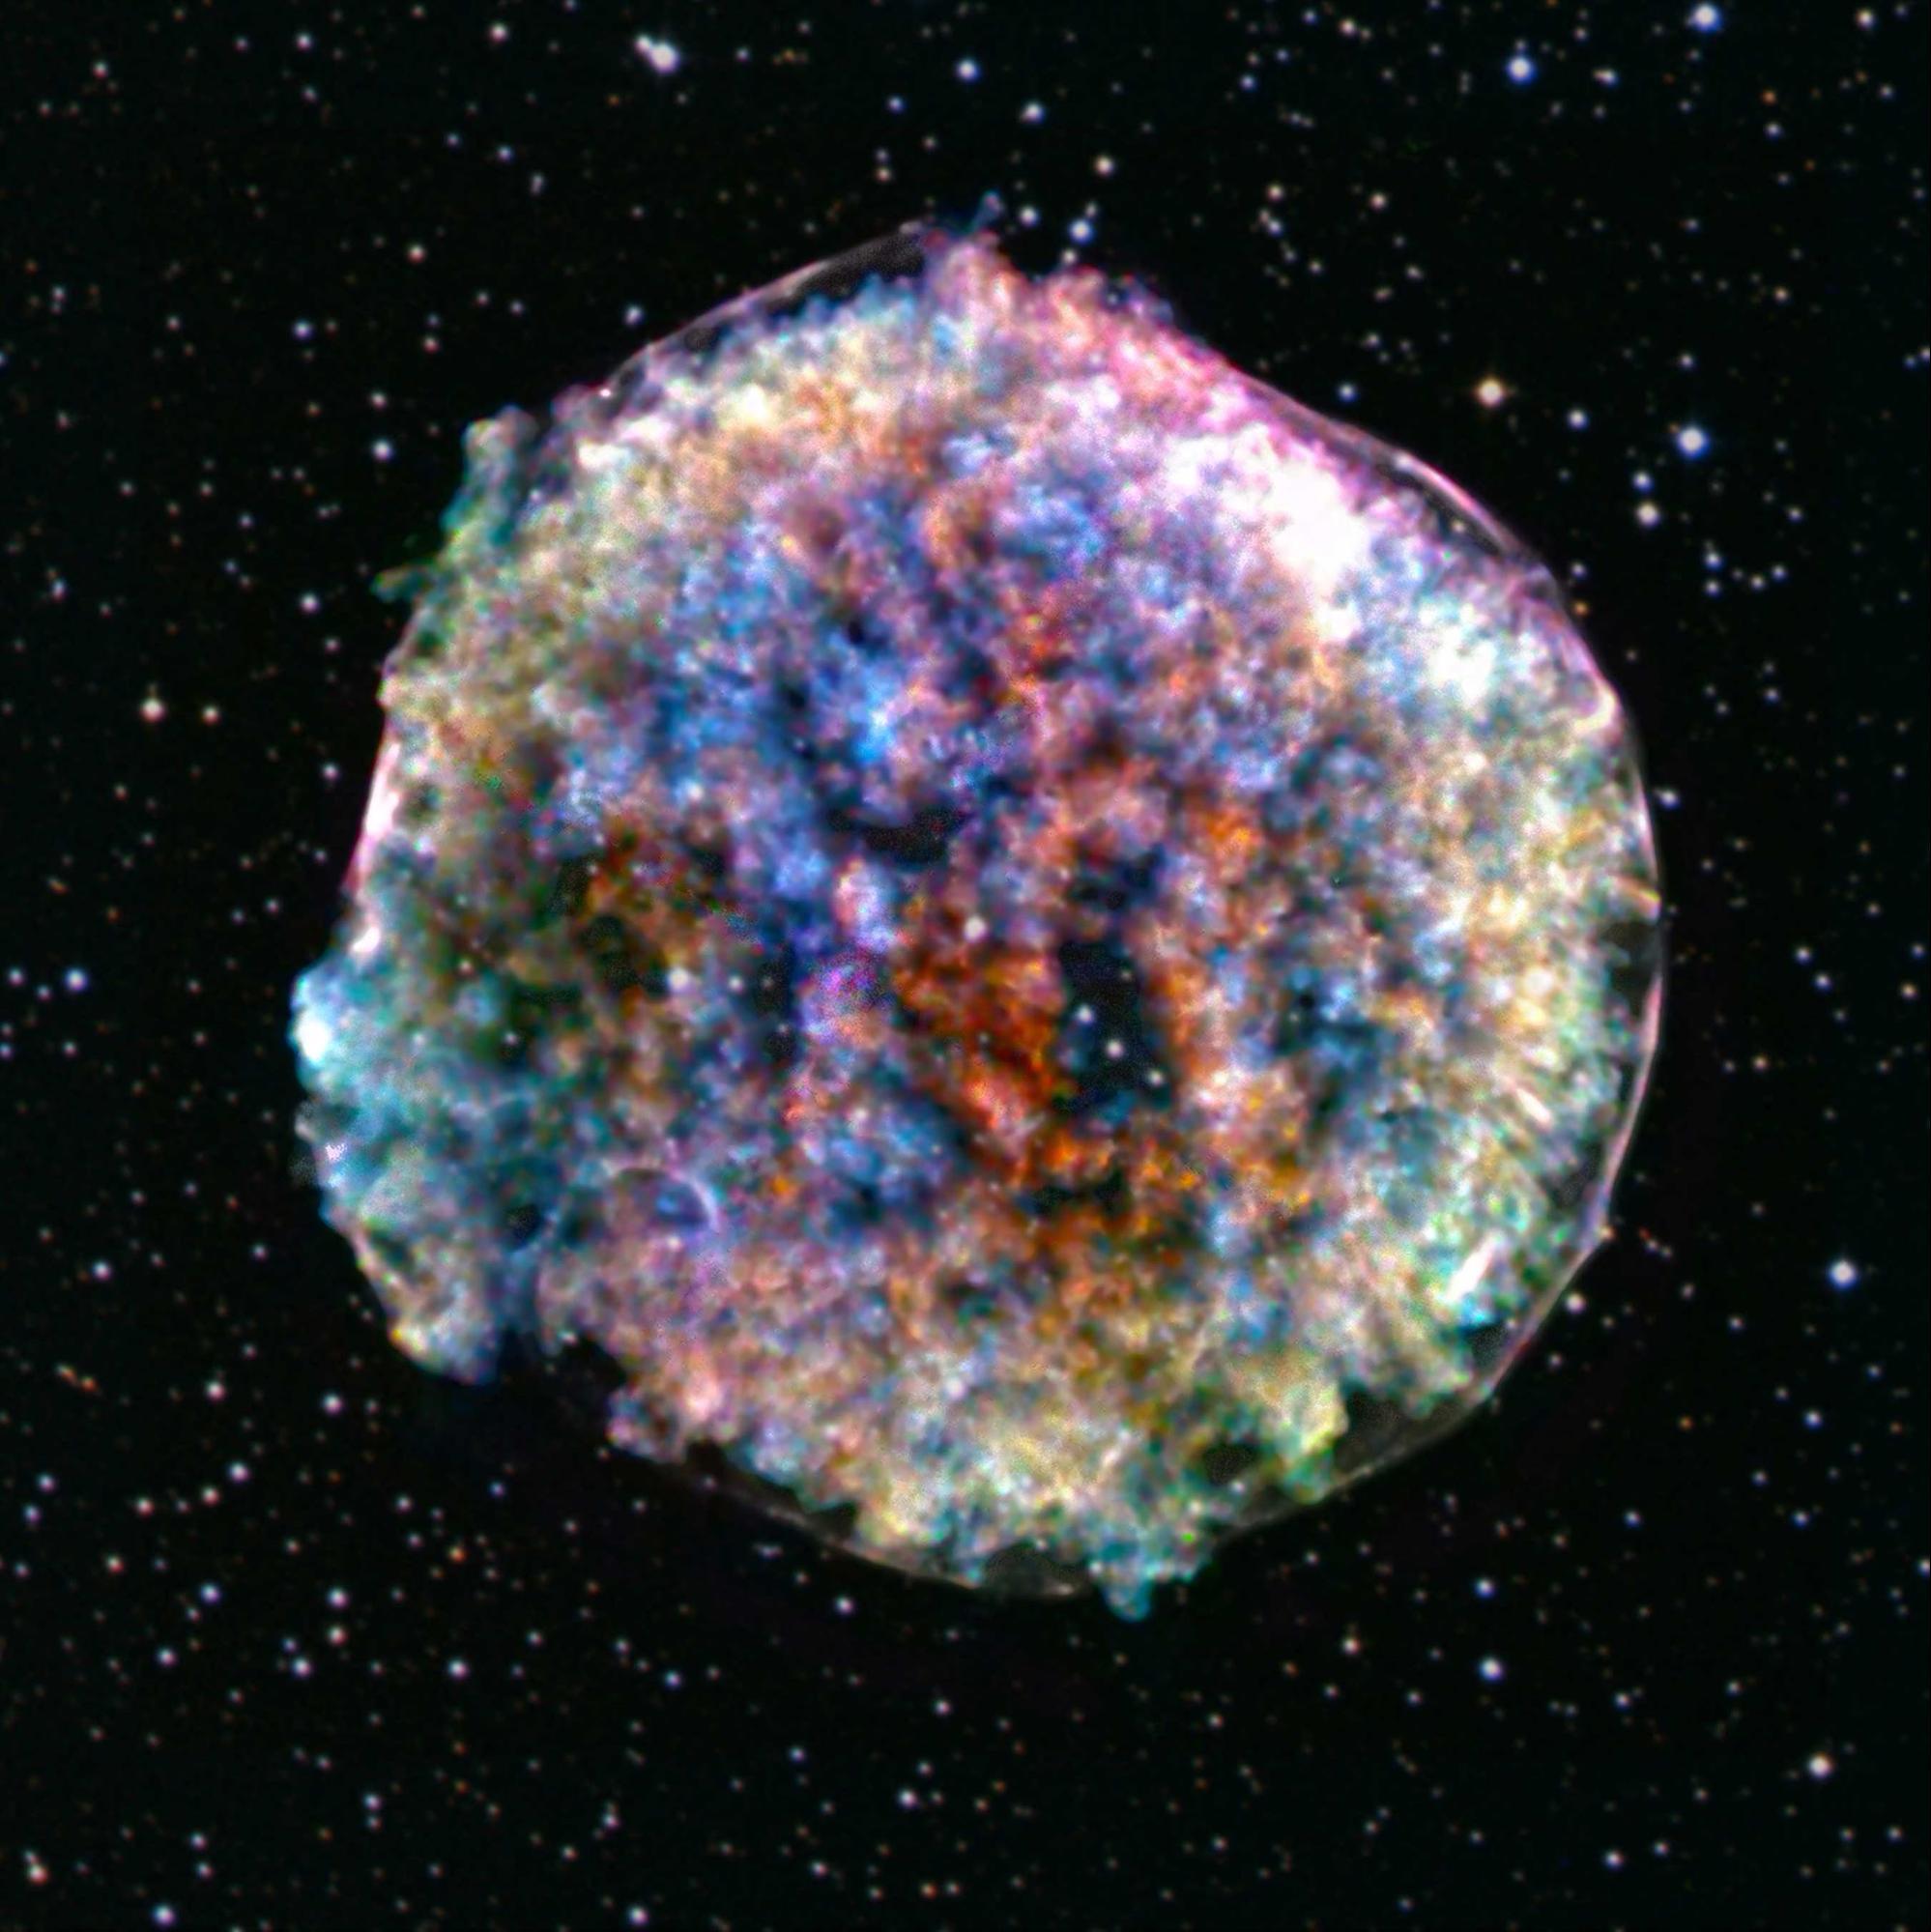 image of a supernova